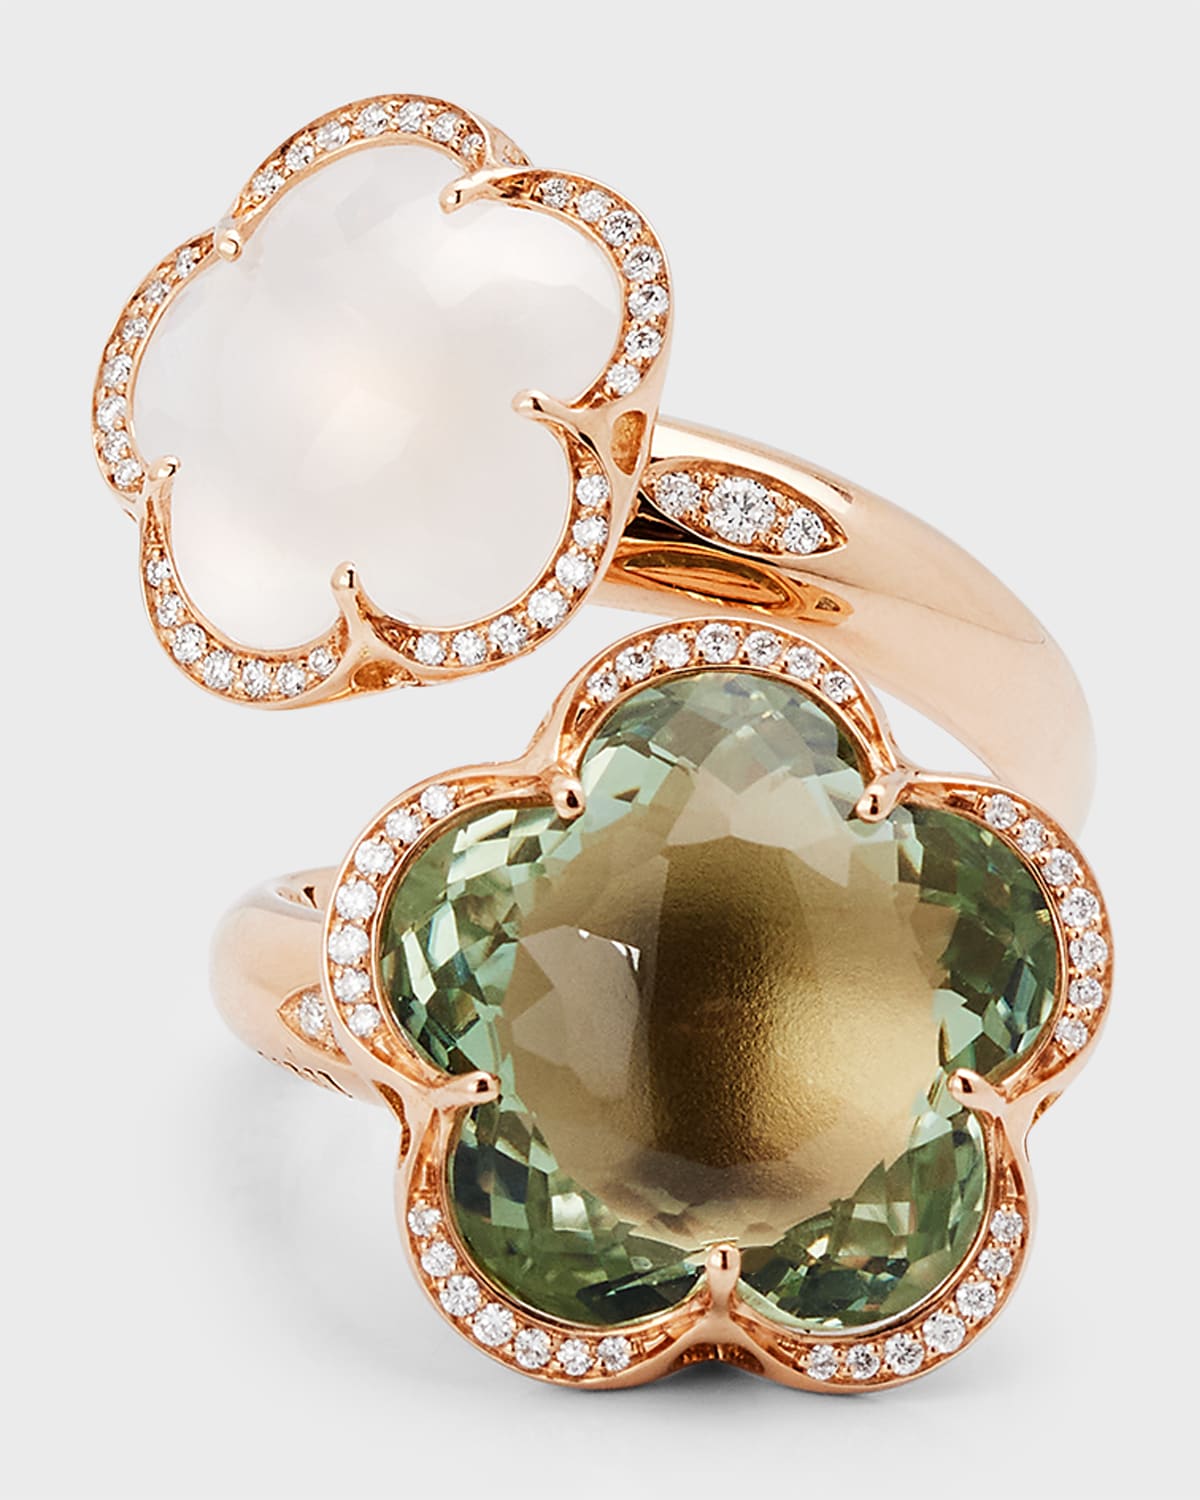 Bon Ton 18K Rose Gold Ring with Gemstones and Diamonds